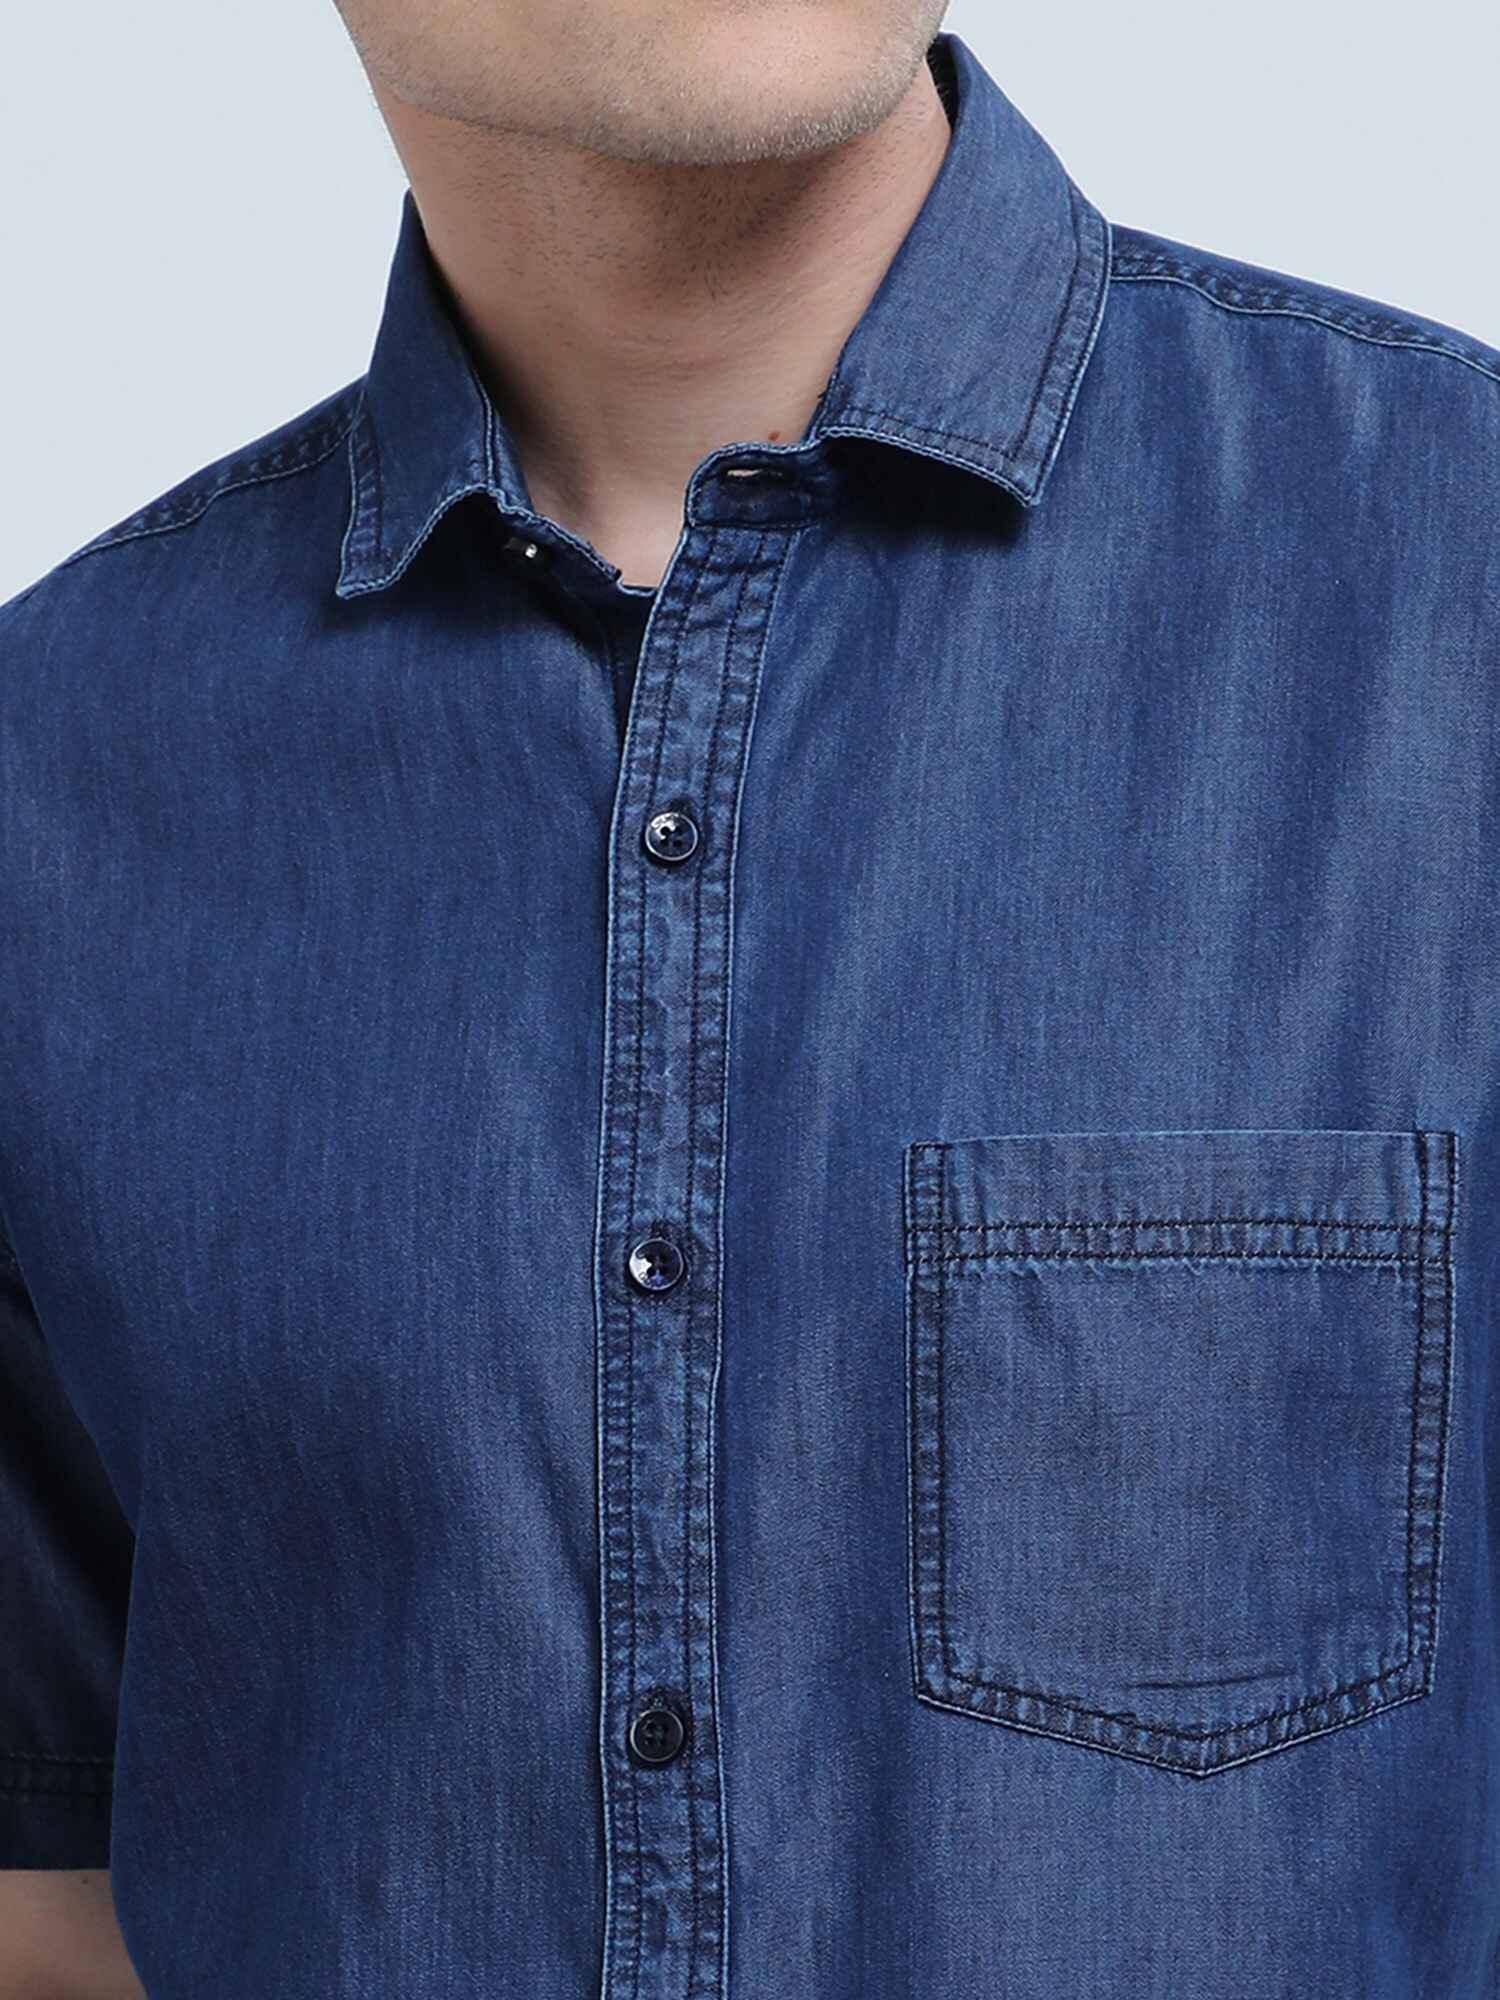 Indigo Denim Single Pocket Half Sleeve Shirt - Guniaa Fashions